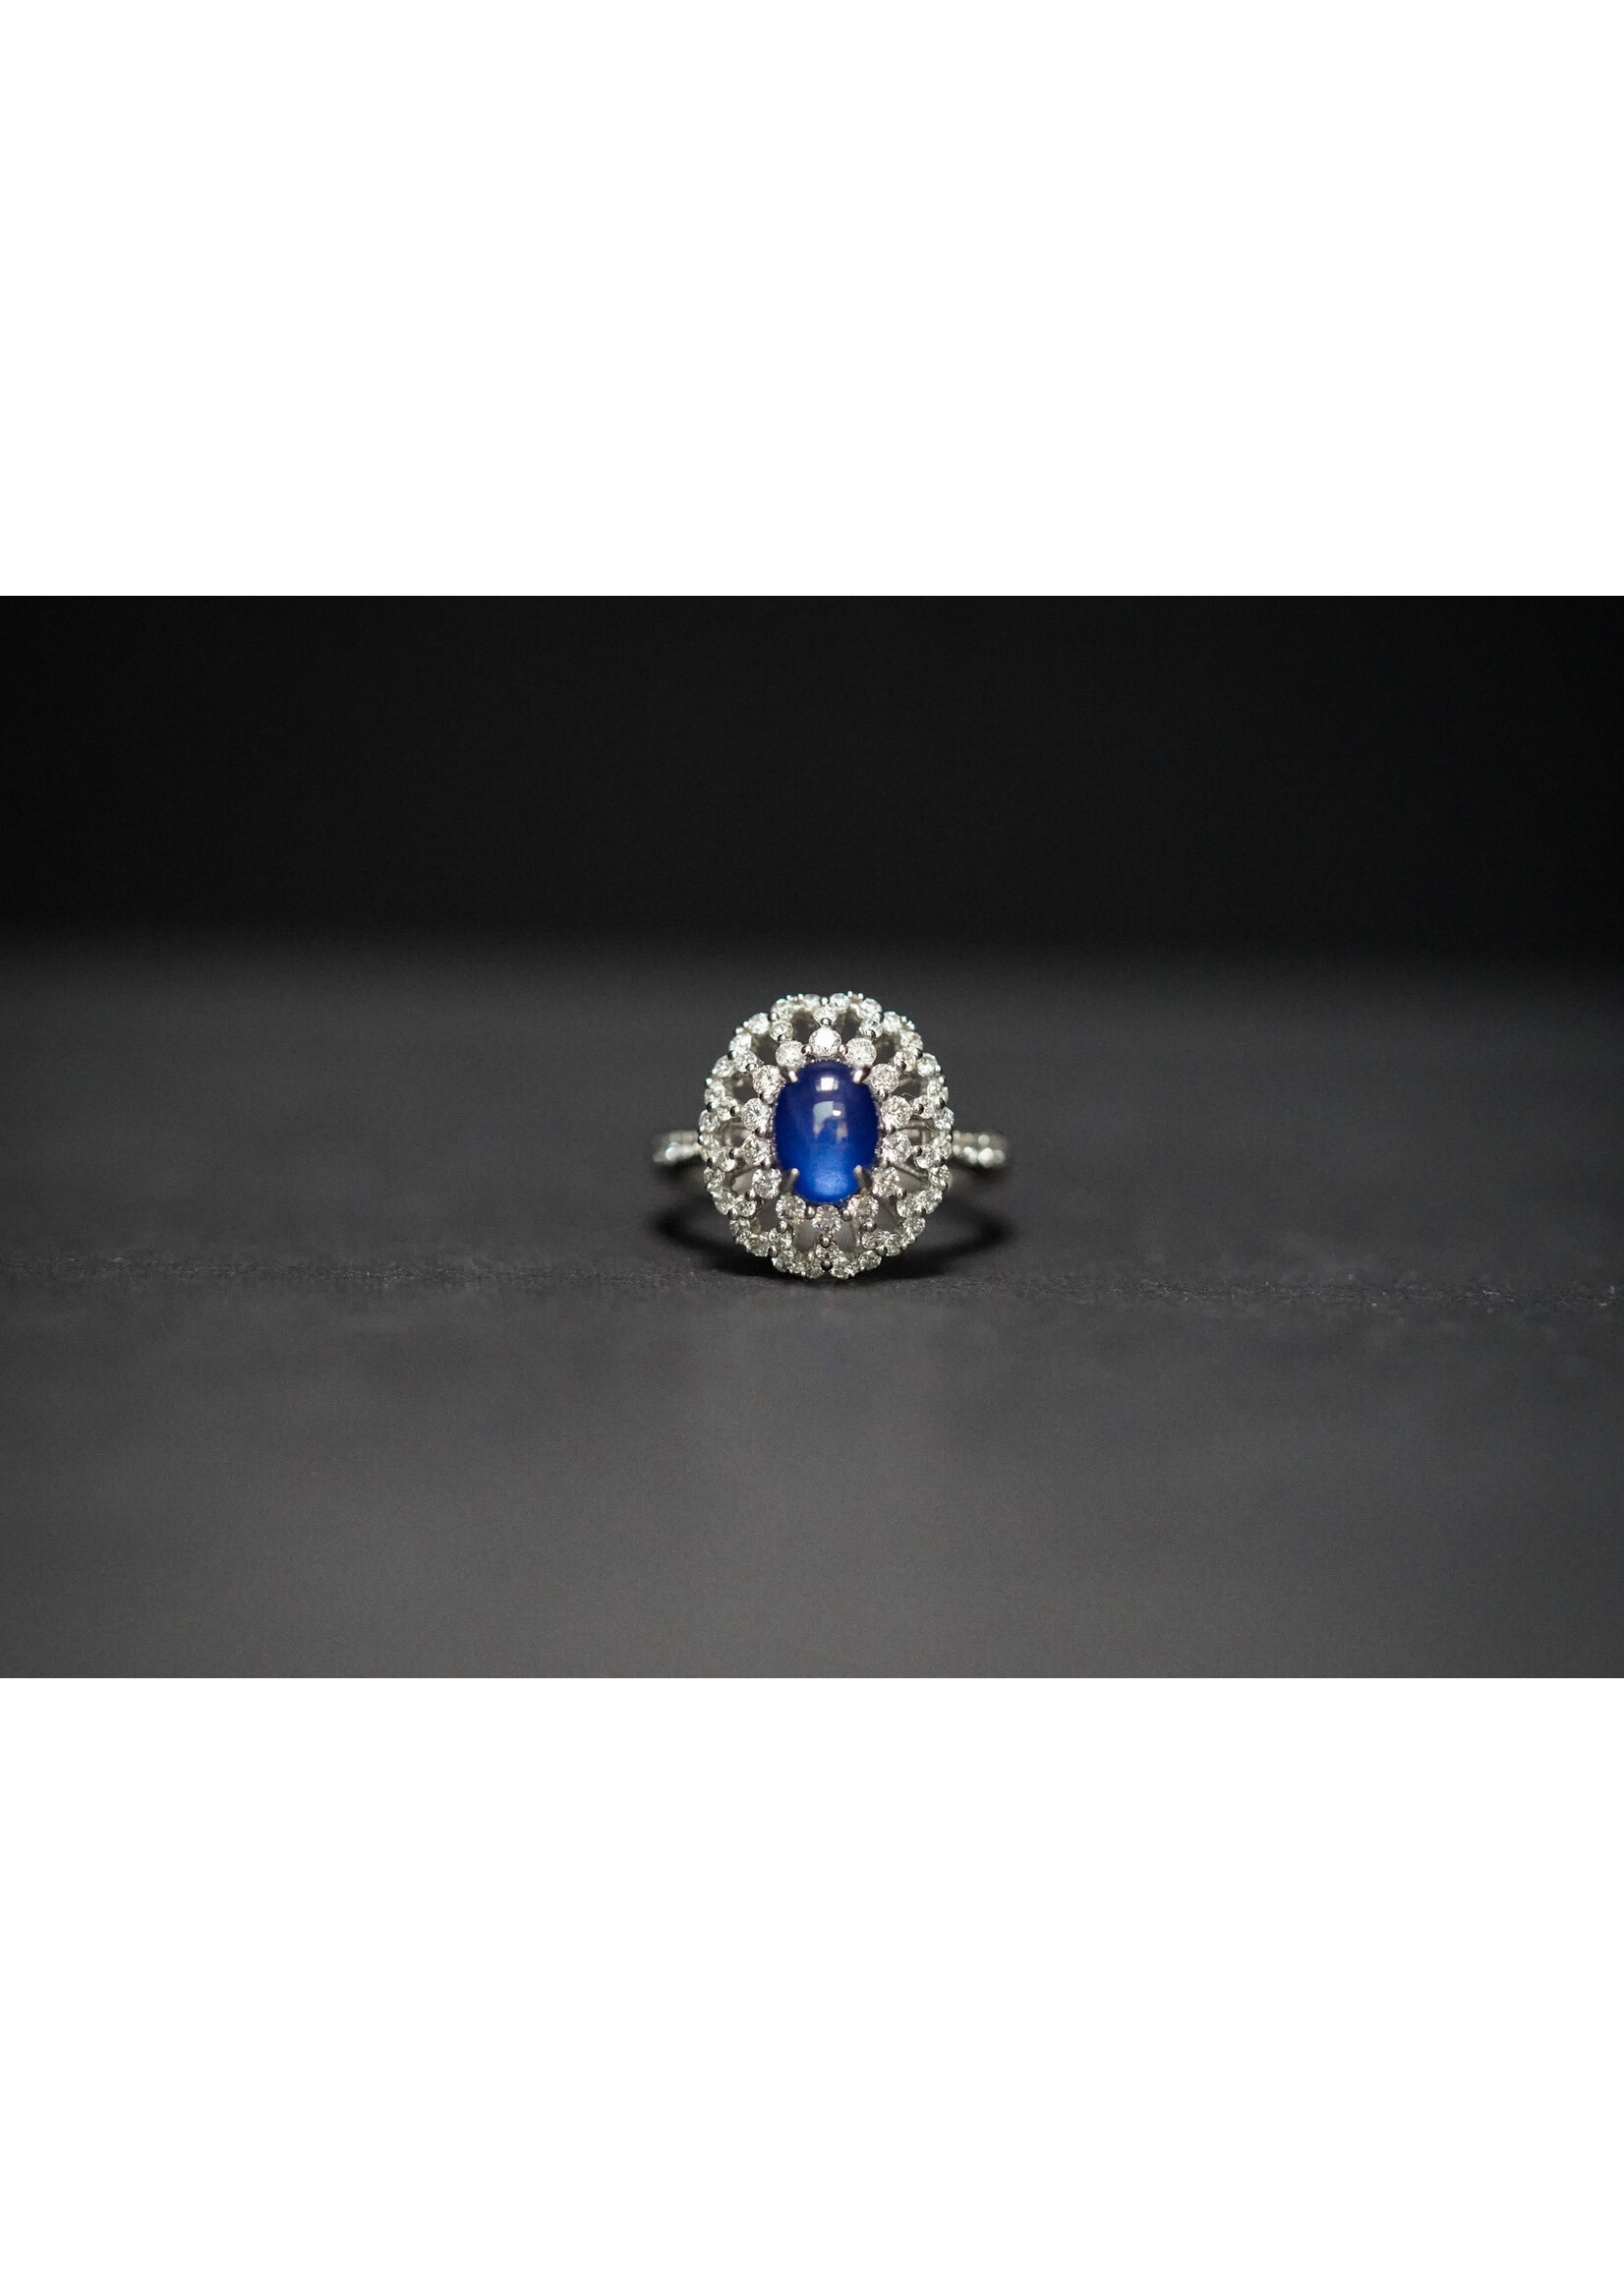 14KW 4.3g 2.99ctw (2.11ctr) Sapphire & Diamond Halo Ring (size 7)